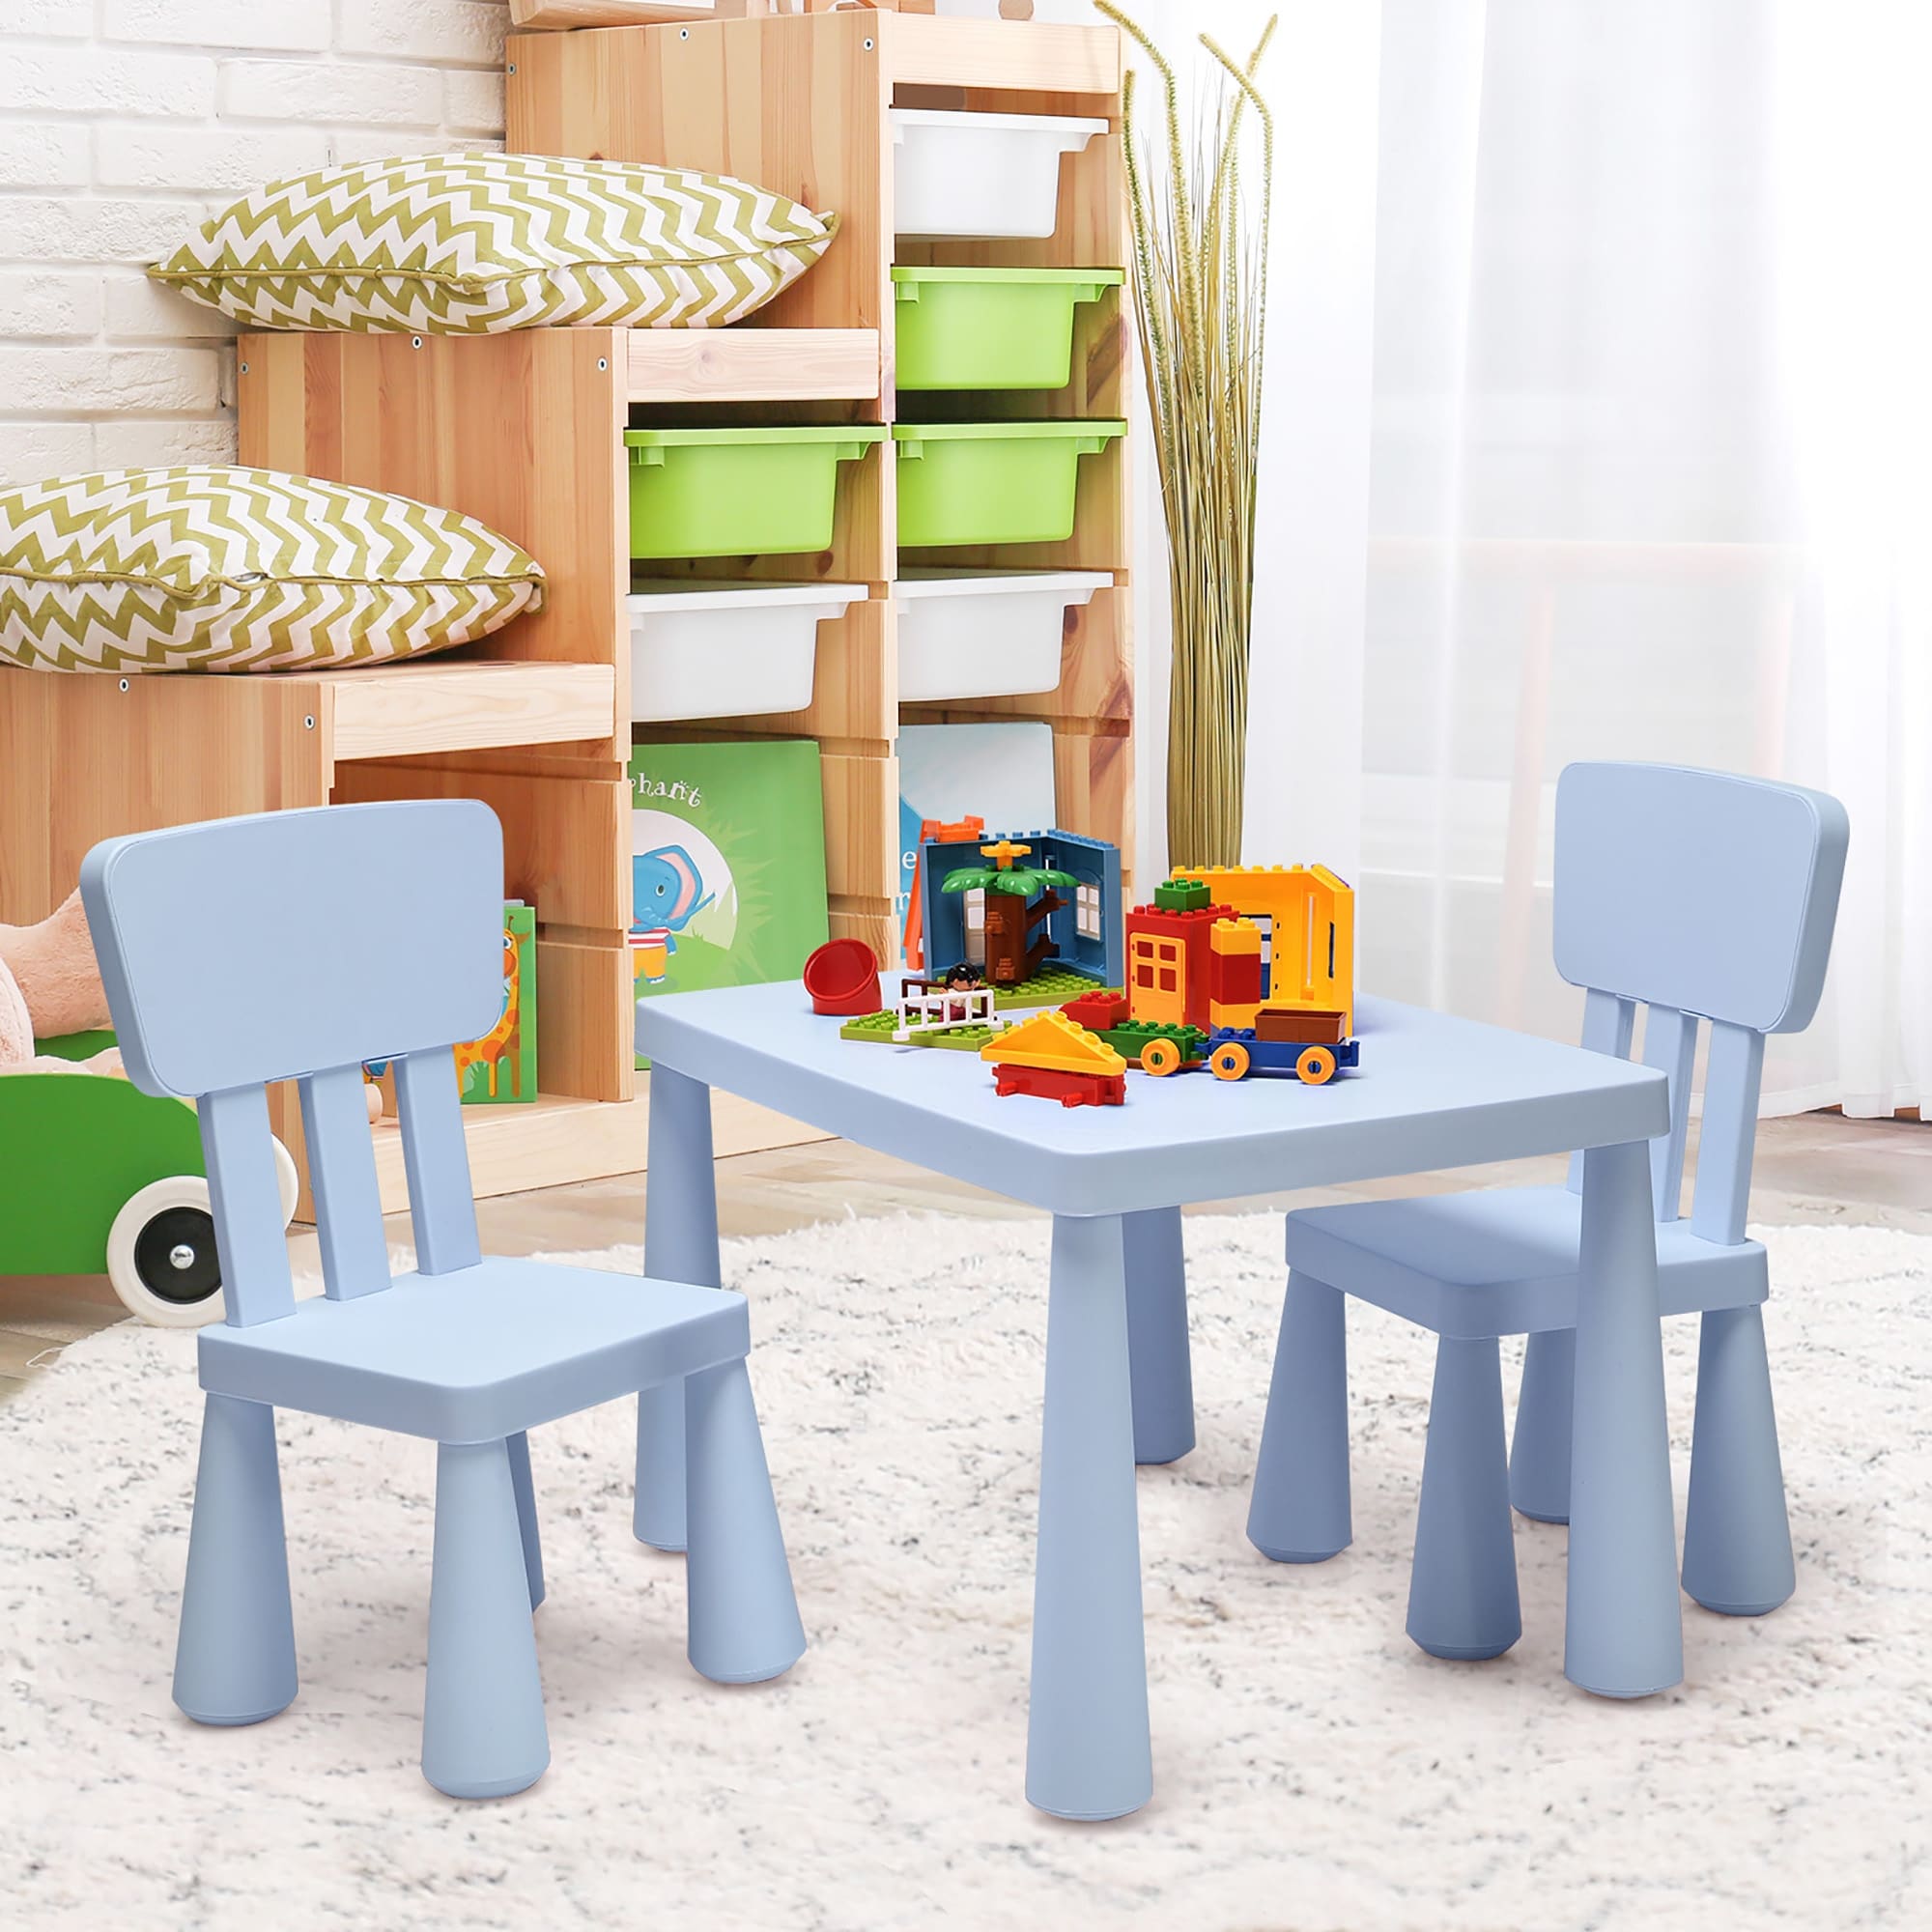 https://ak1.ostkcdn.com/images/products/is/images/direct/4dc35d55fd3f5f4004daa189f0108a684d70cbd2/Kids-Table-and-Chair-Set-3-Piece-Set-Toddler-Furniture.jpg